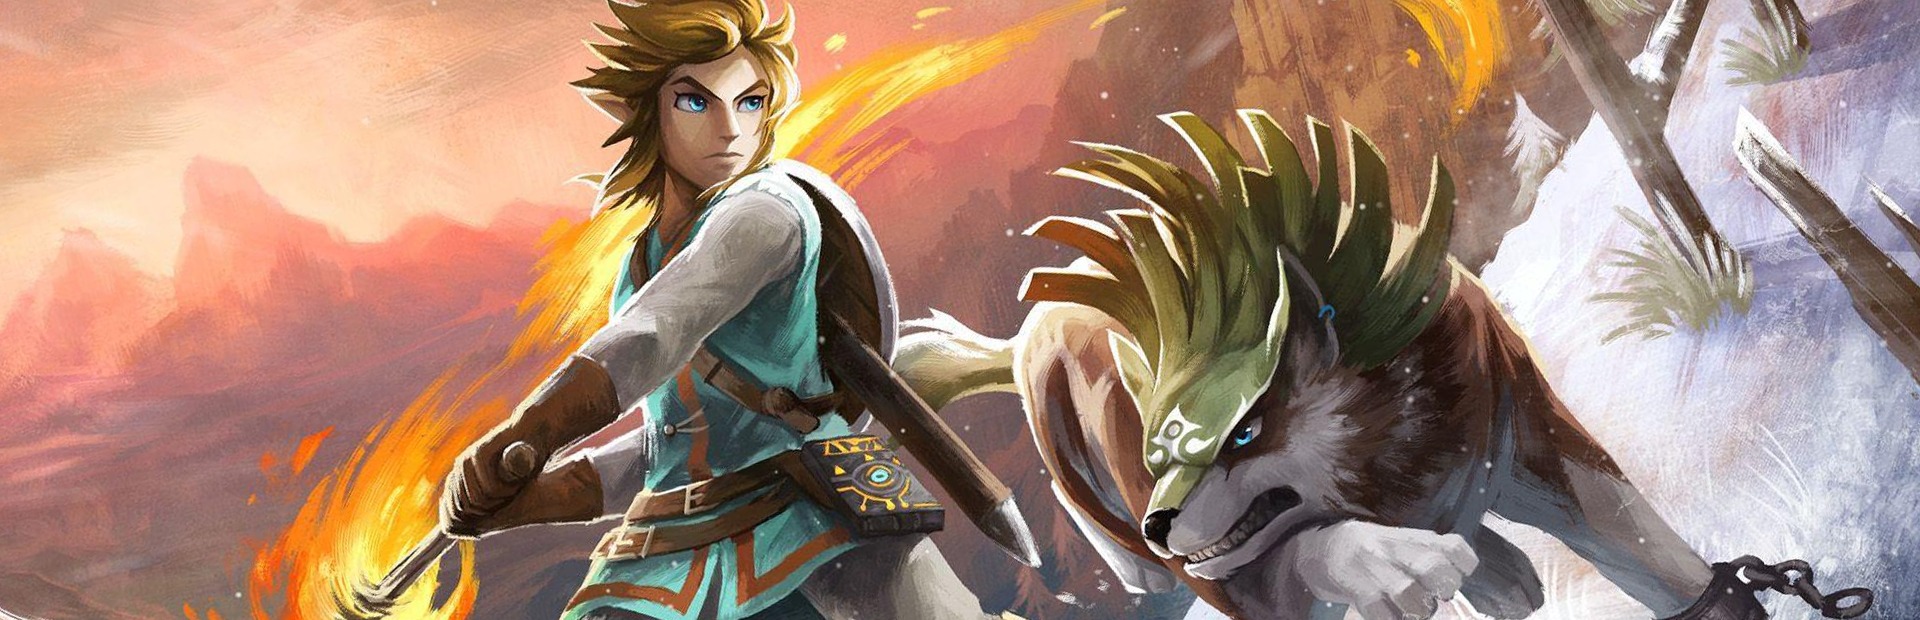 Banner The Legend of Zelda: Breath of the Wild Switch